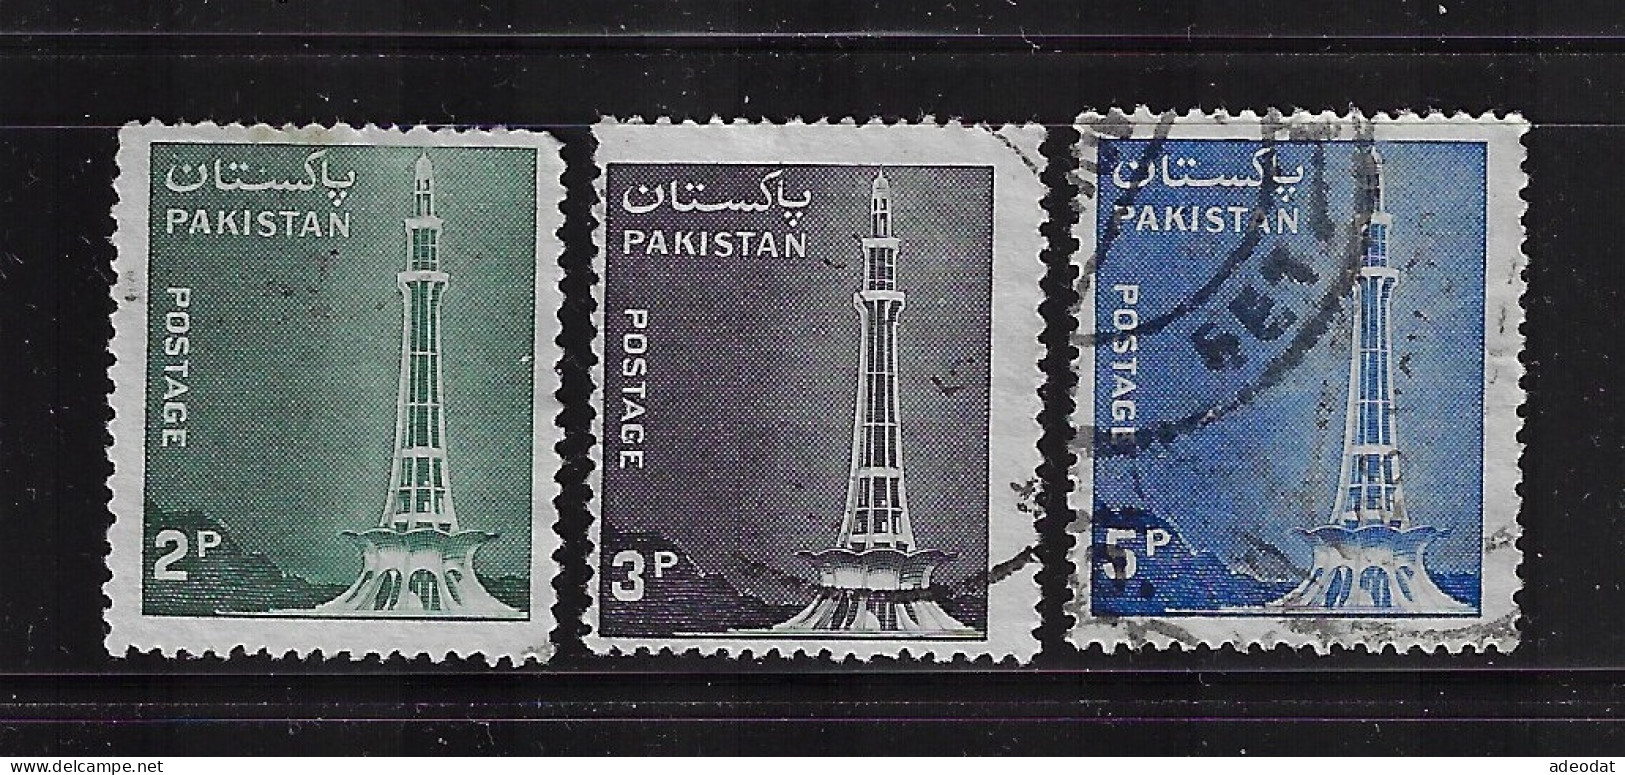 PAKISTAN 1978 SCOTT 459-461  USED   CV $0.60 .j - Pakistan